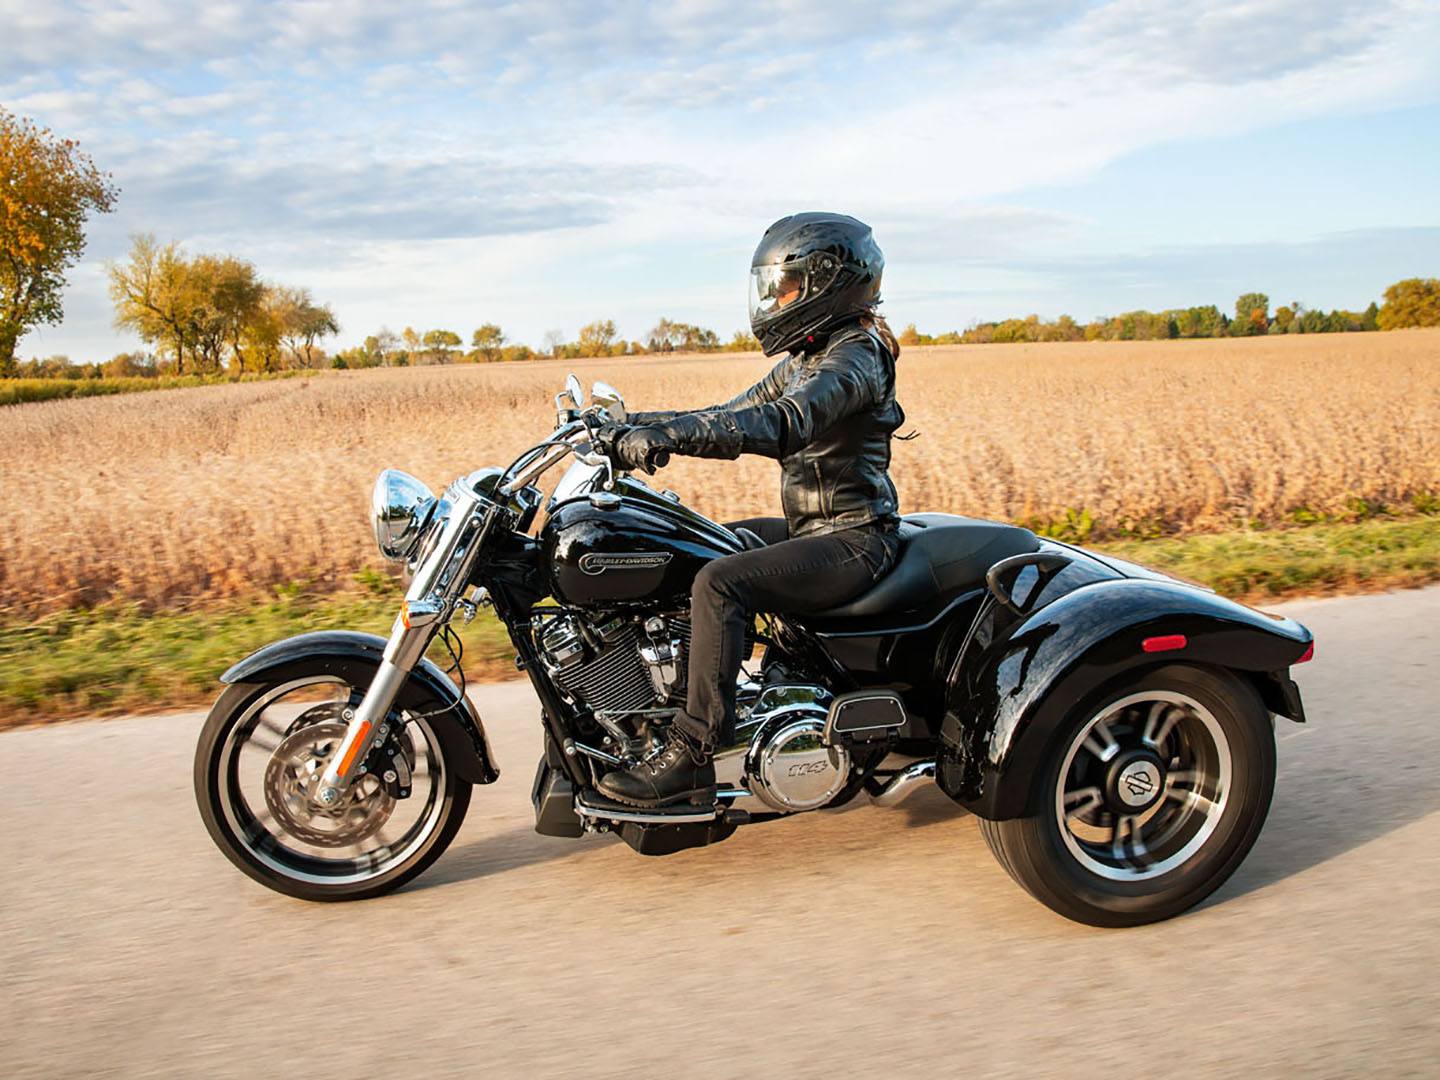 2021 Harley-Davidson Freewheeler® in Chariton, Iowa - Photo 8